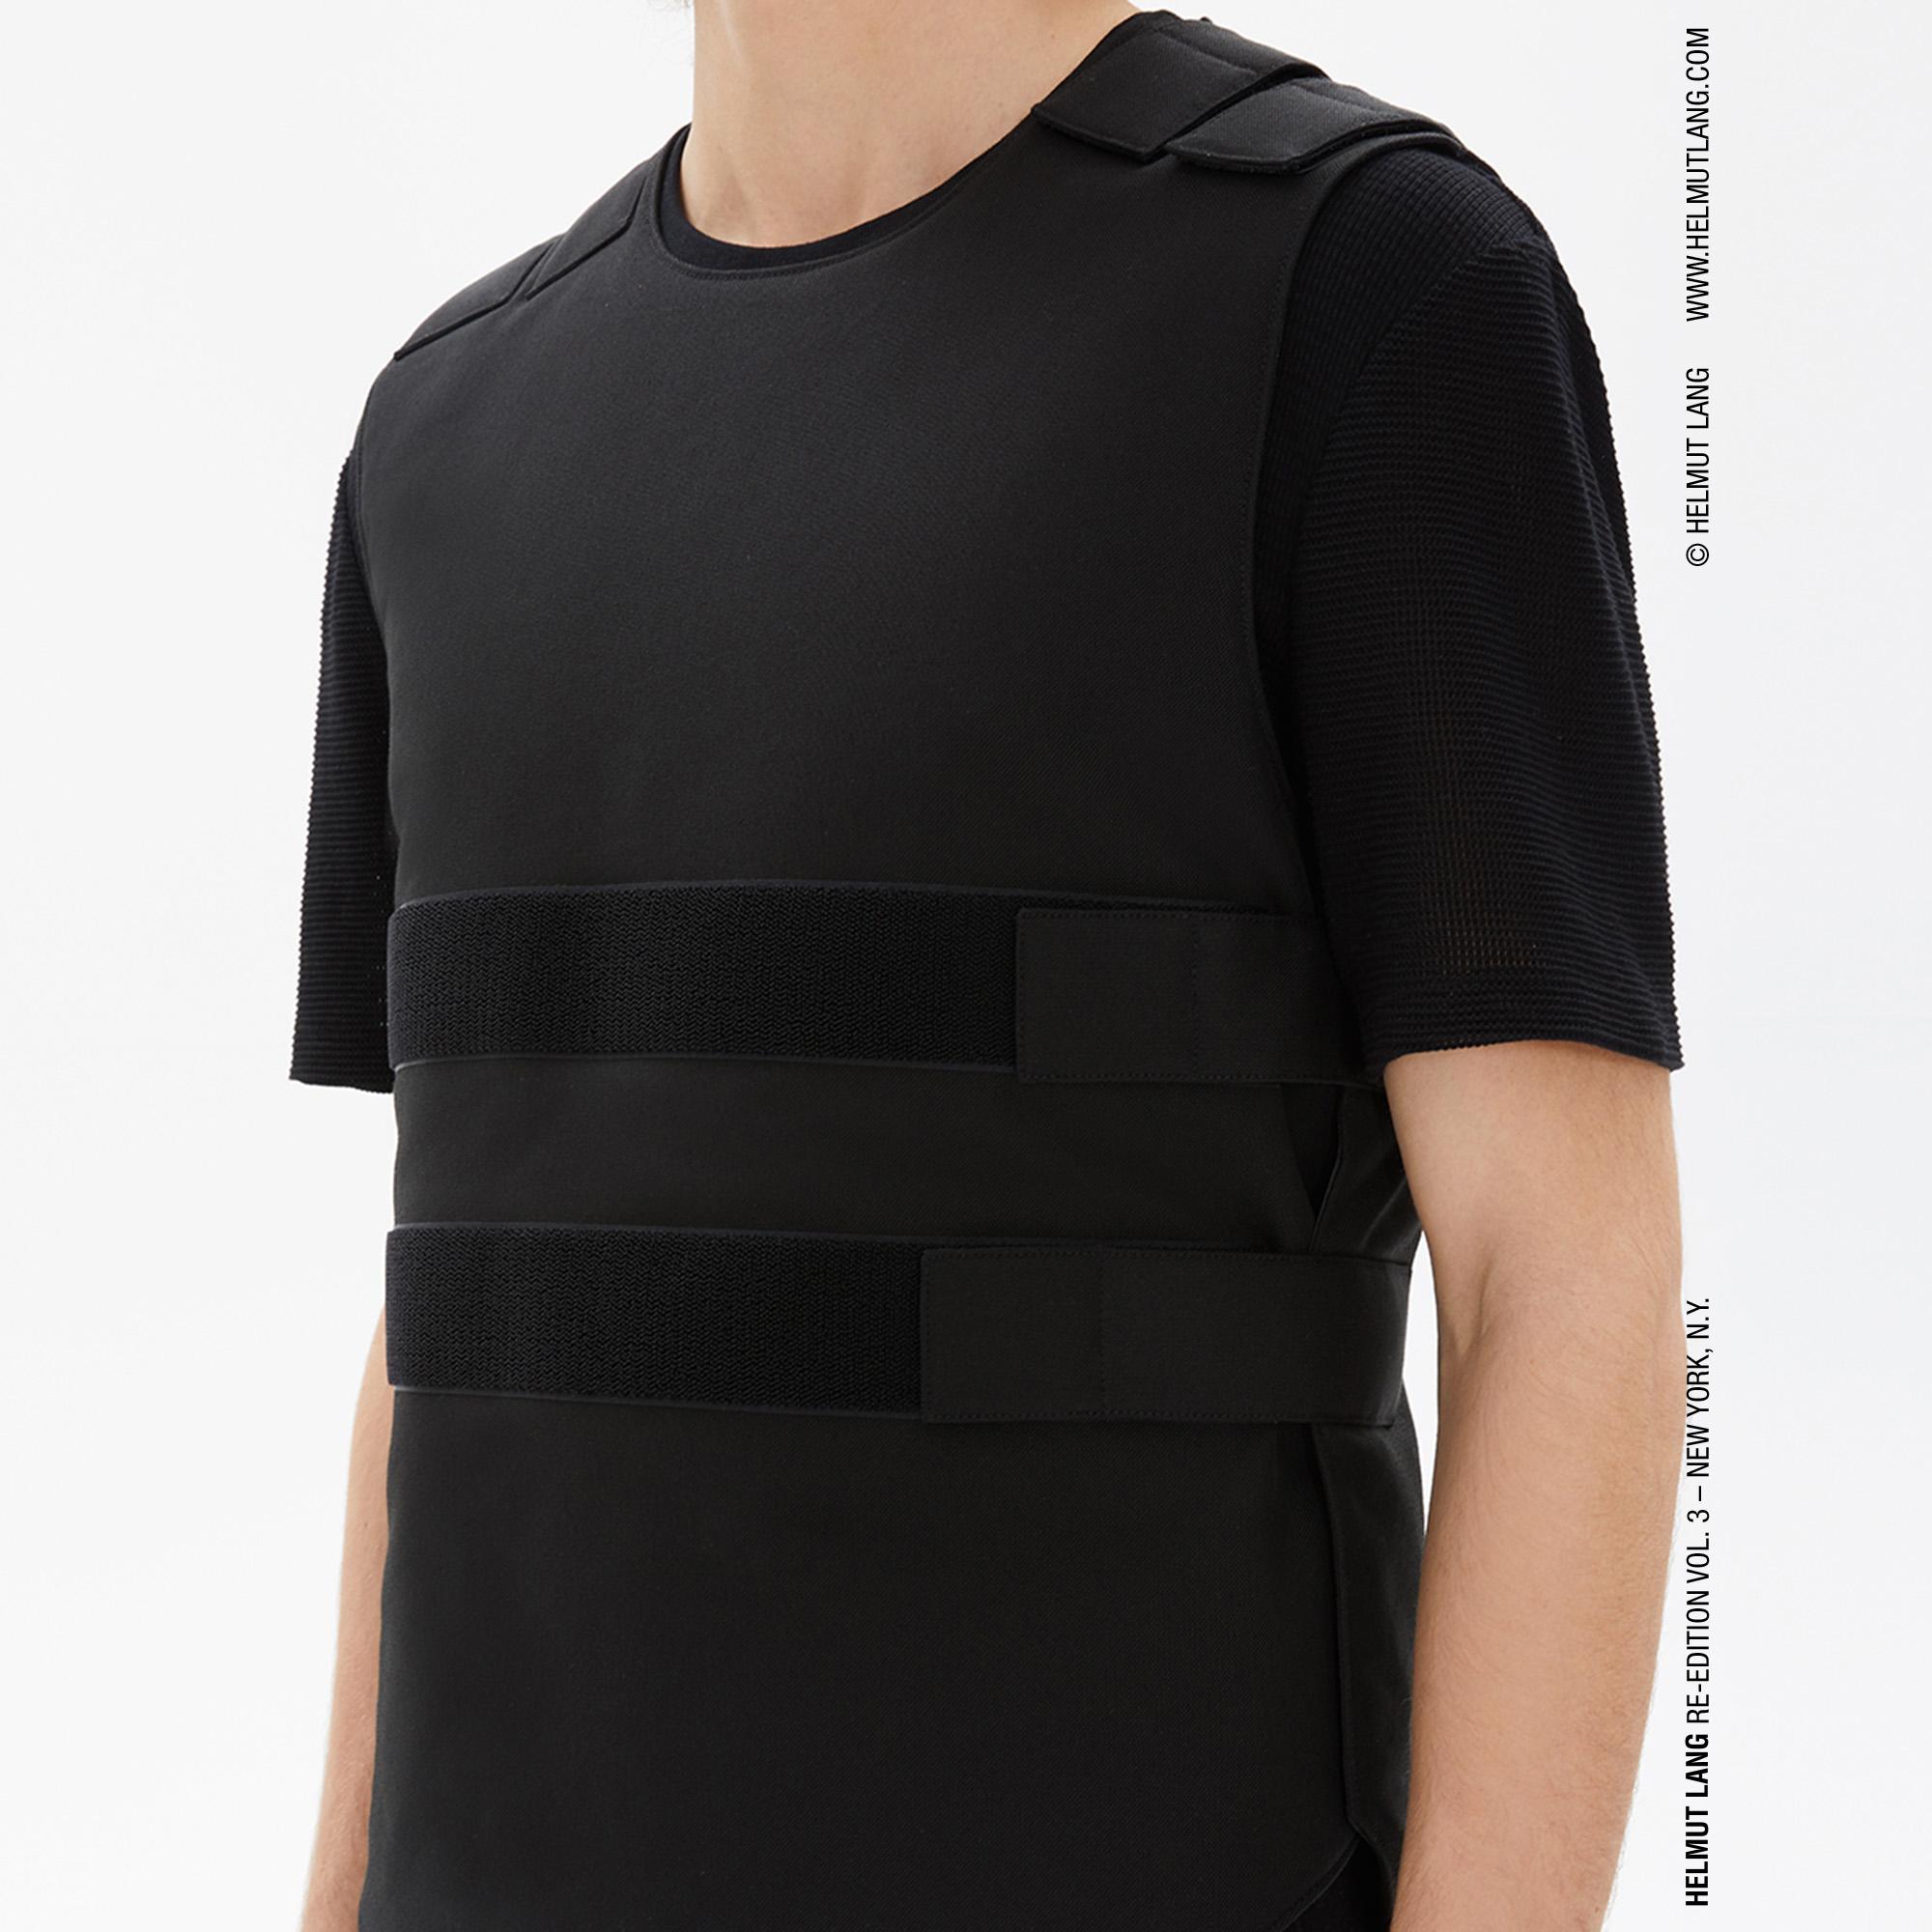 Helmut Lang Re-Edition Black Velcro Bulletproof Vest | WWW.HELMUTLANG.COM